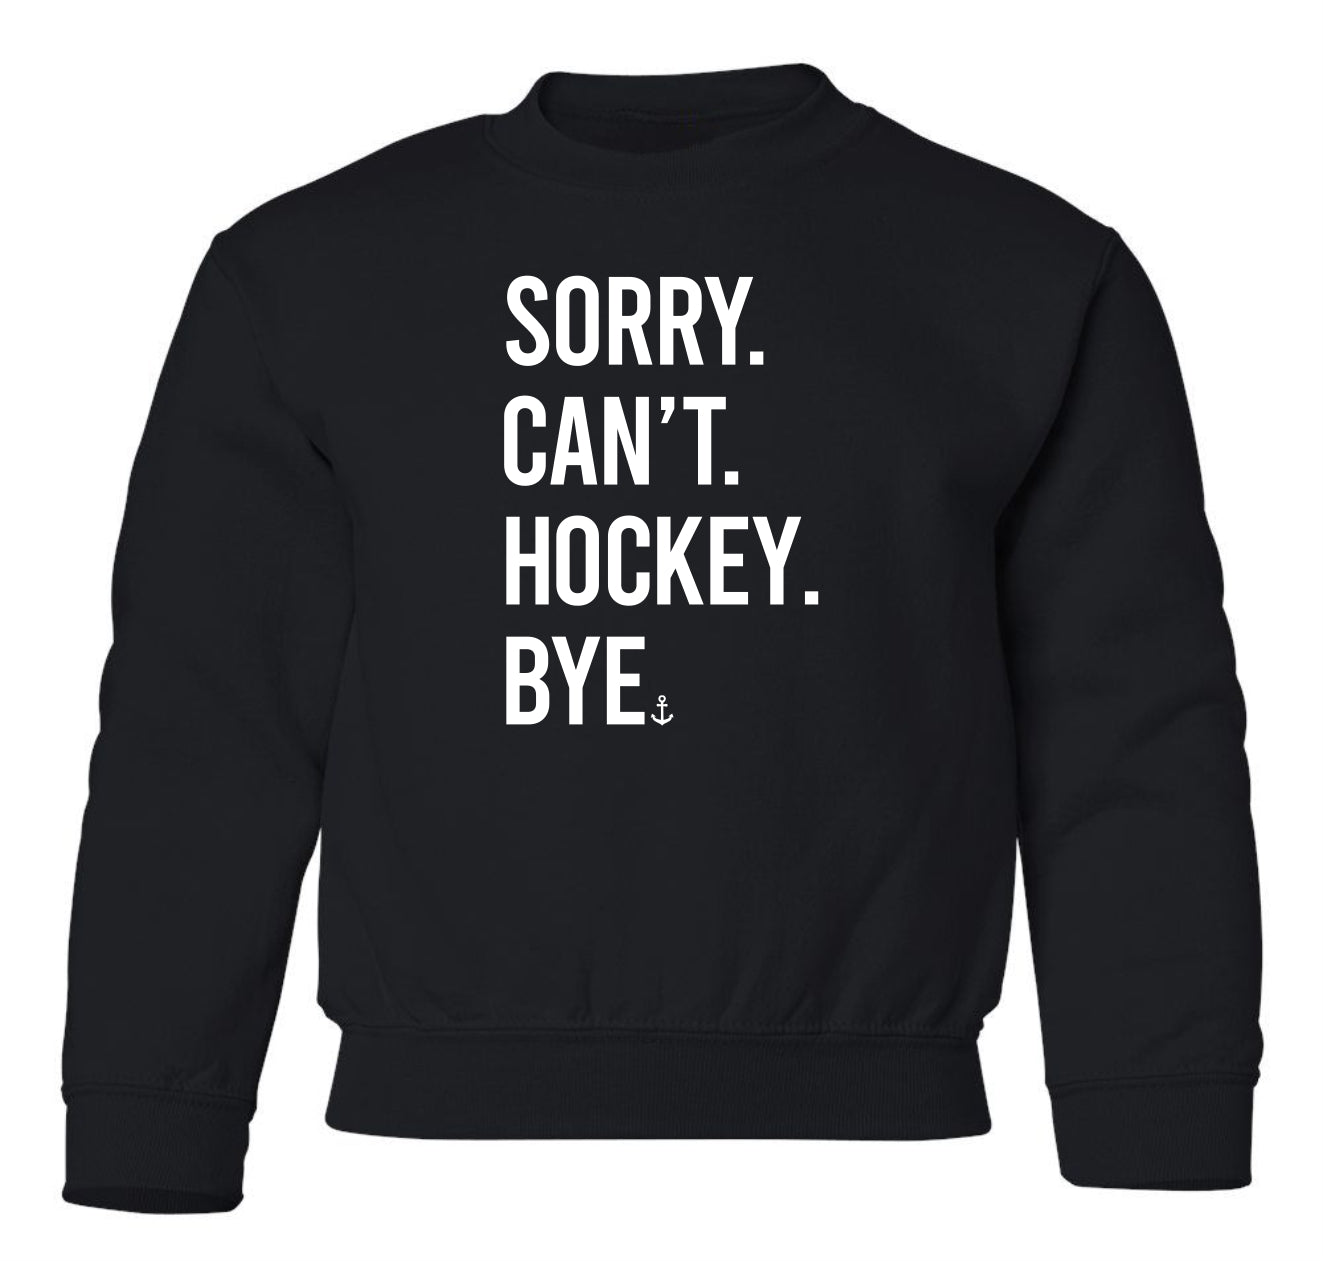 "Sorry. Can't. Hockey. Bye." Toddler/Youth Crewneck Sweatshirt